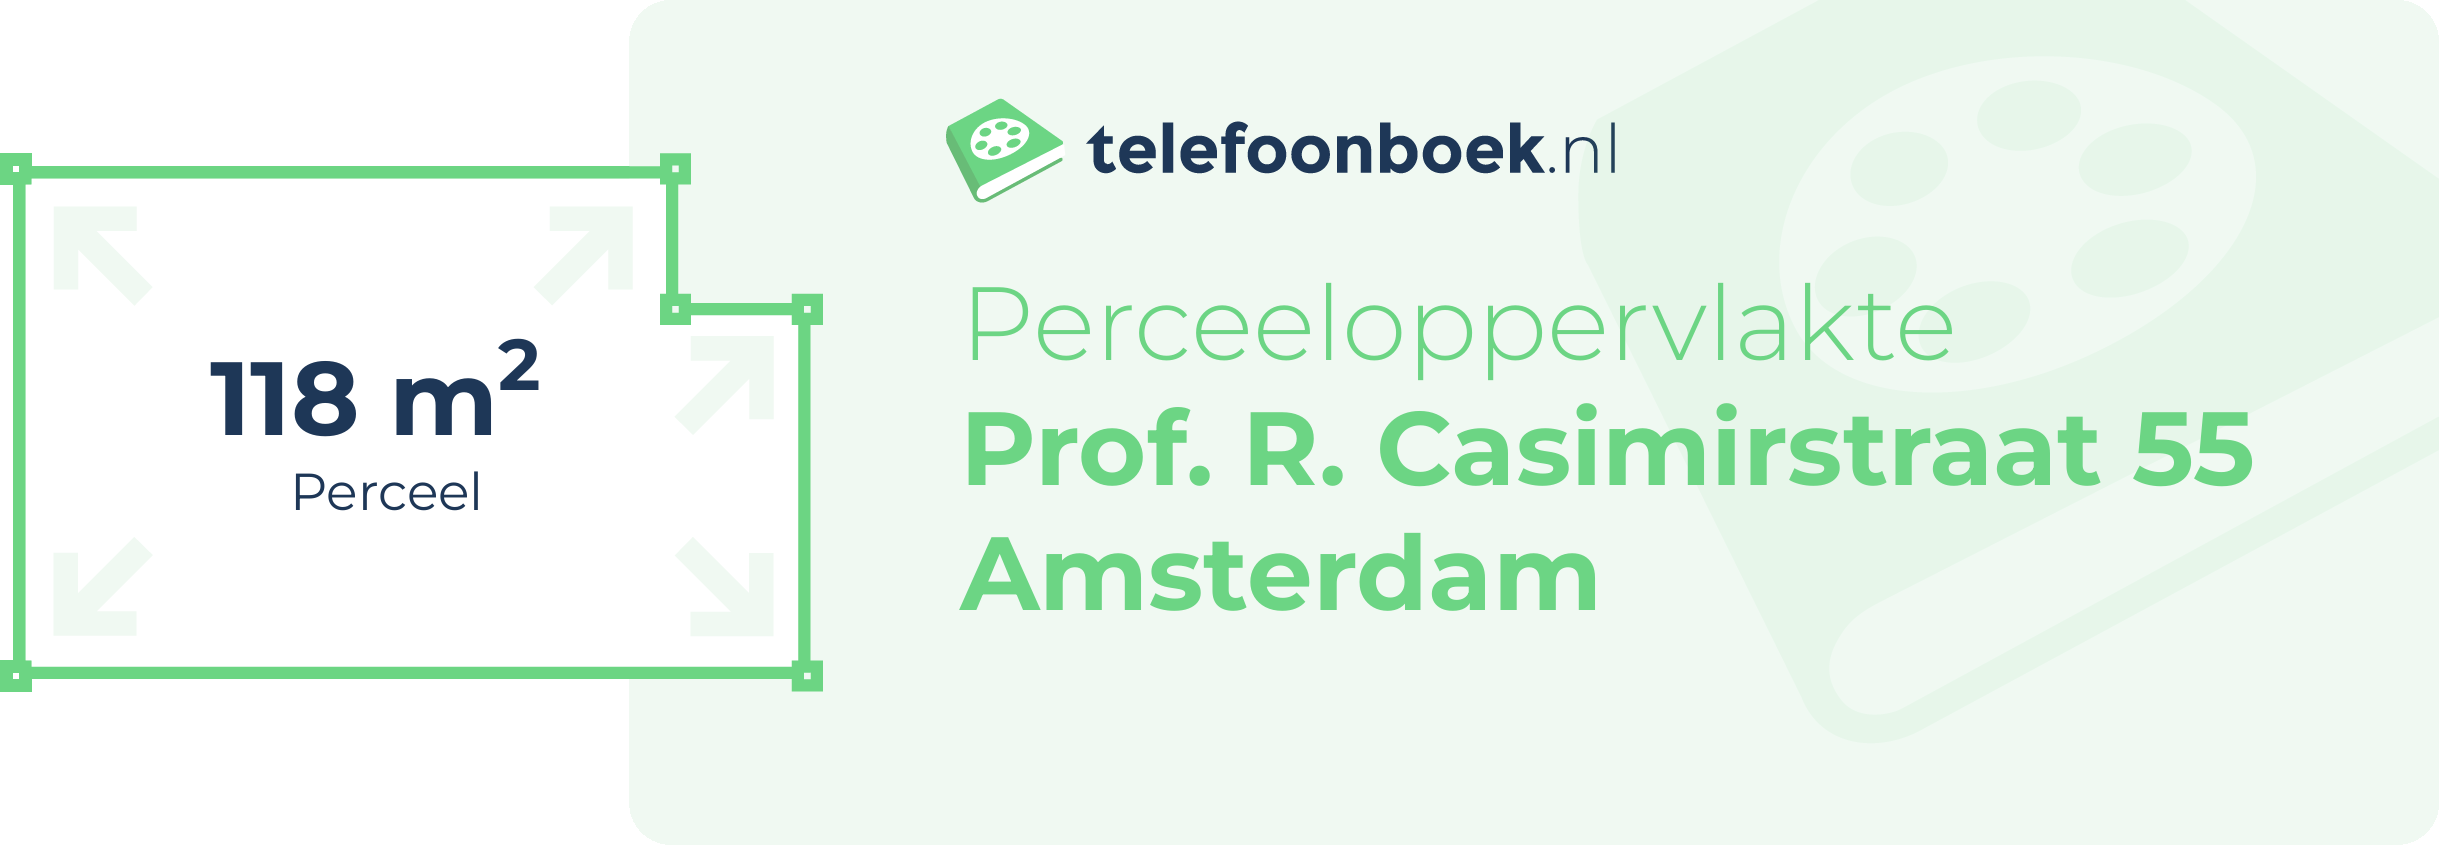 Perceeloppervlakte Prof. R. Casimirstraat 55 Amsterdam